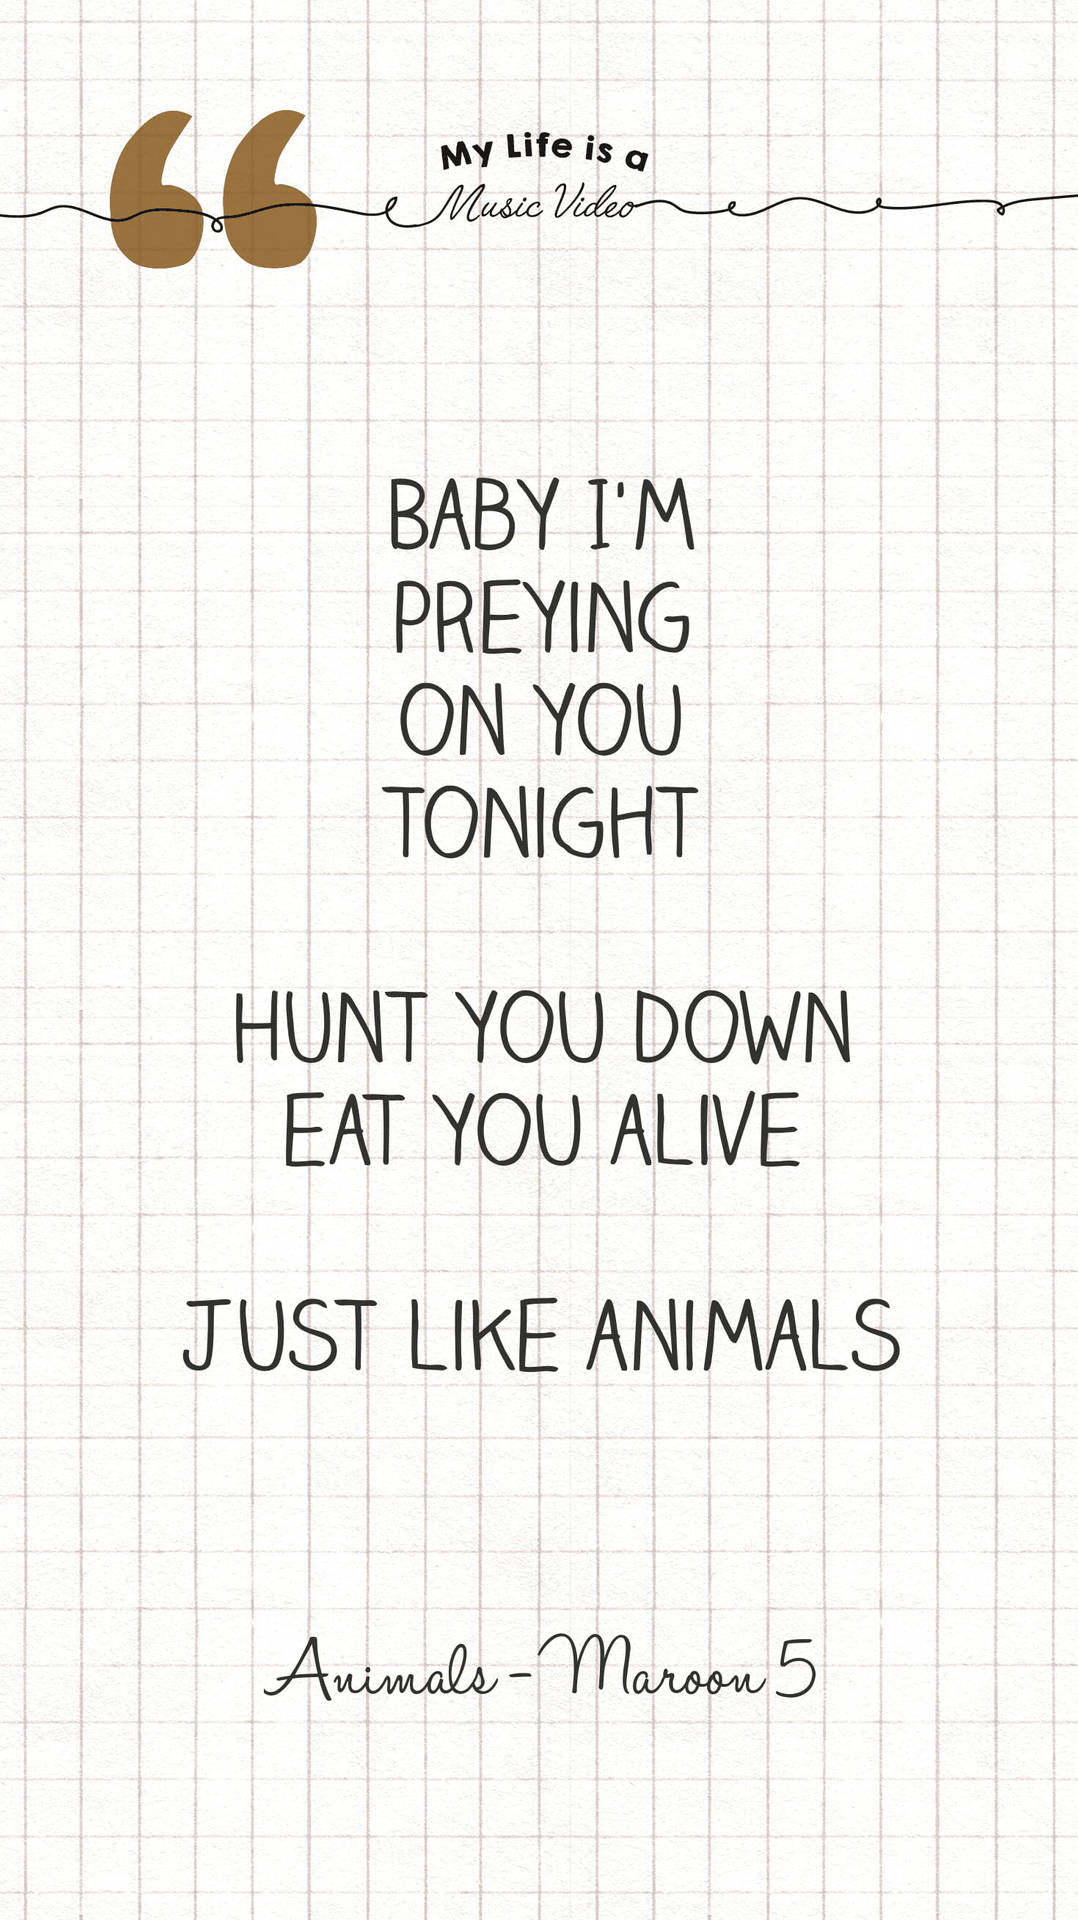 Passionate Maroon 5 Band With Animals Lyrics Poster